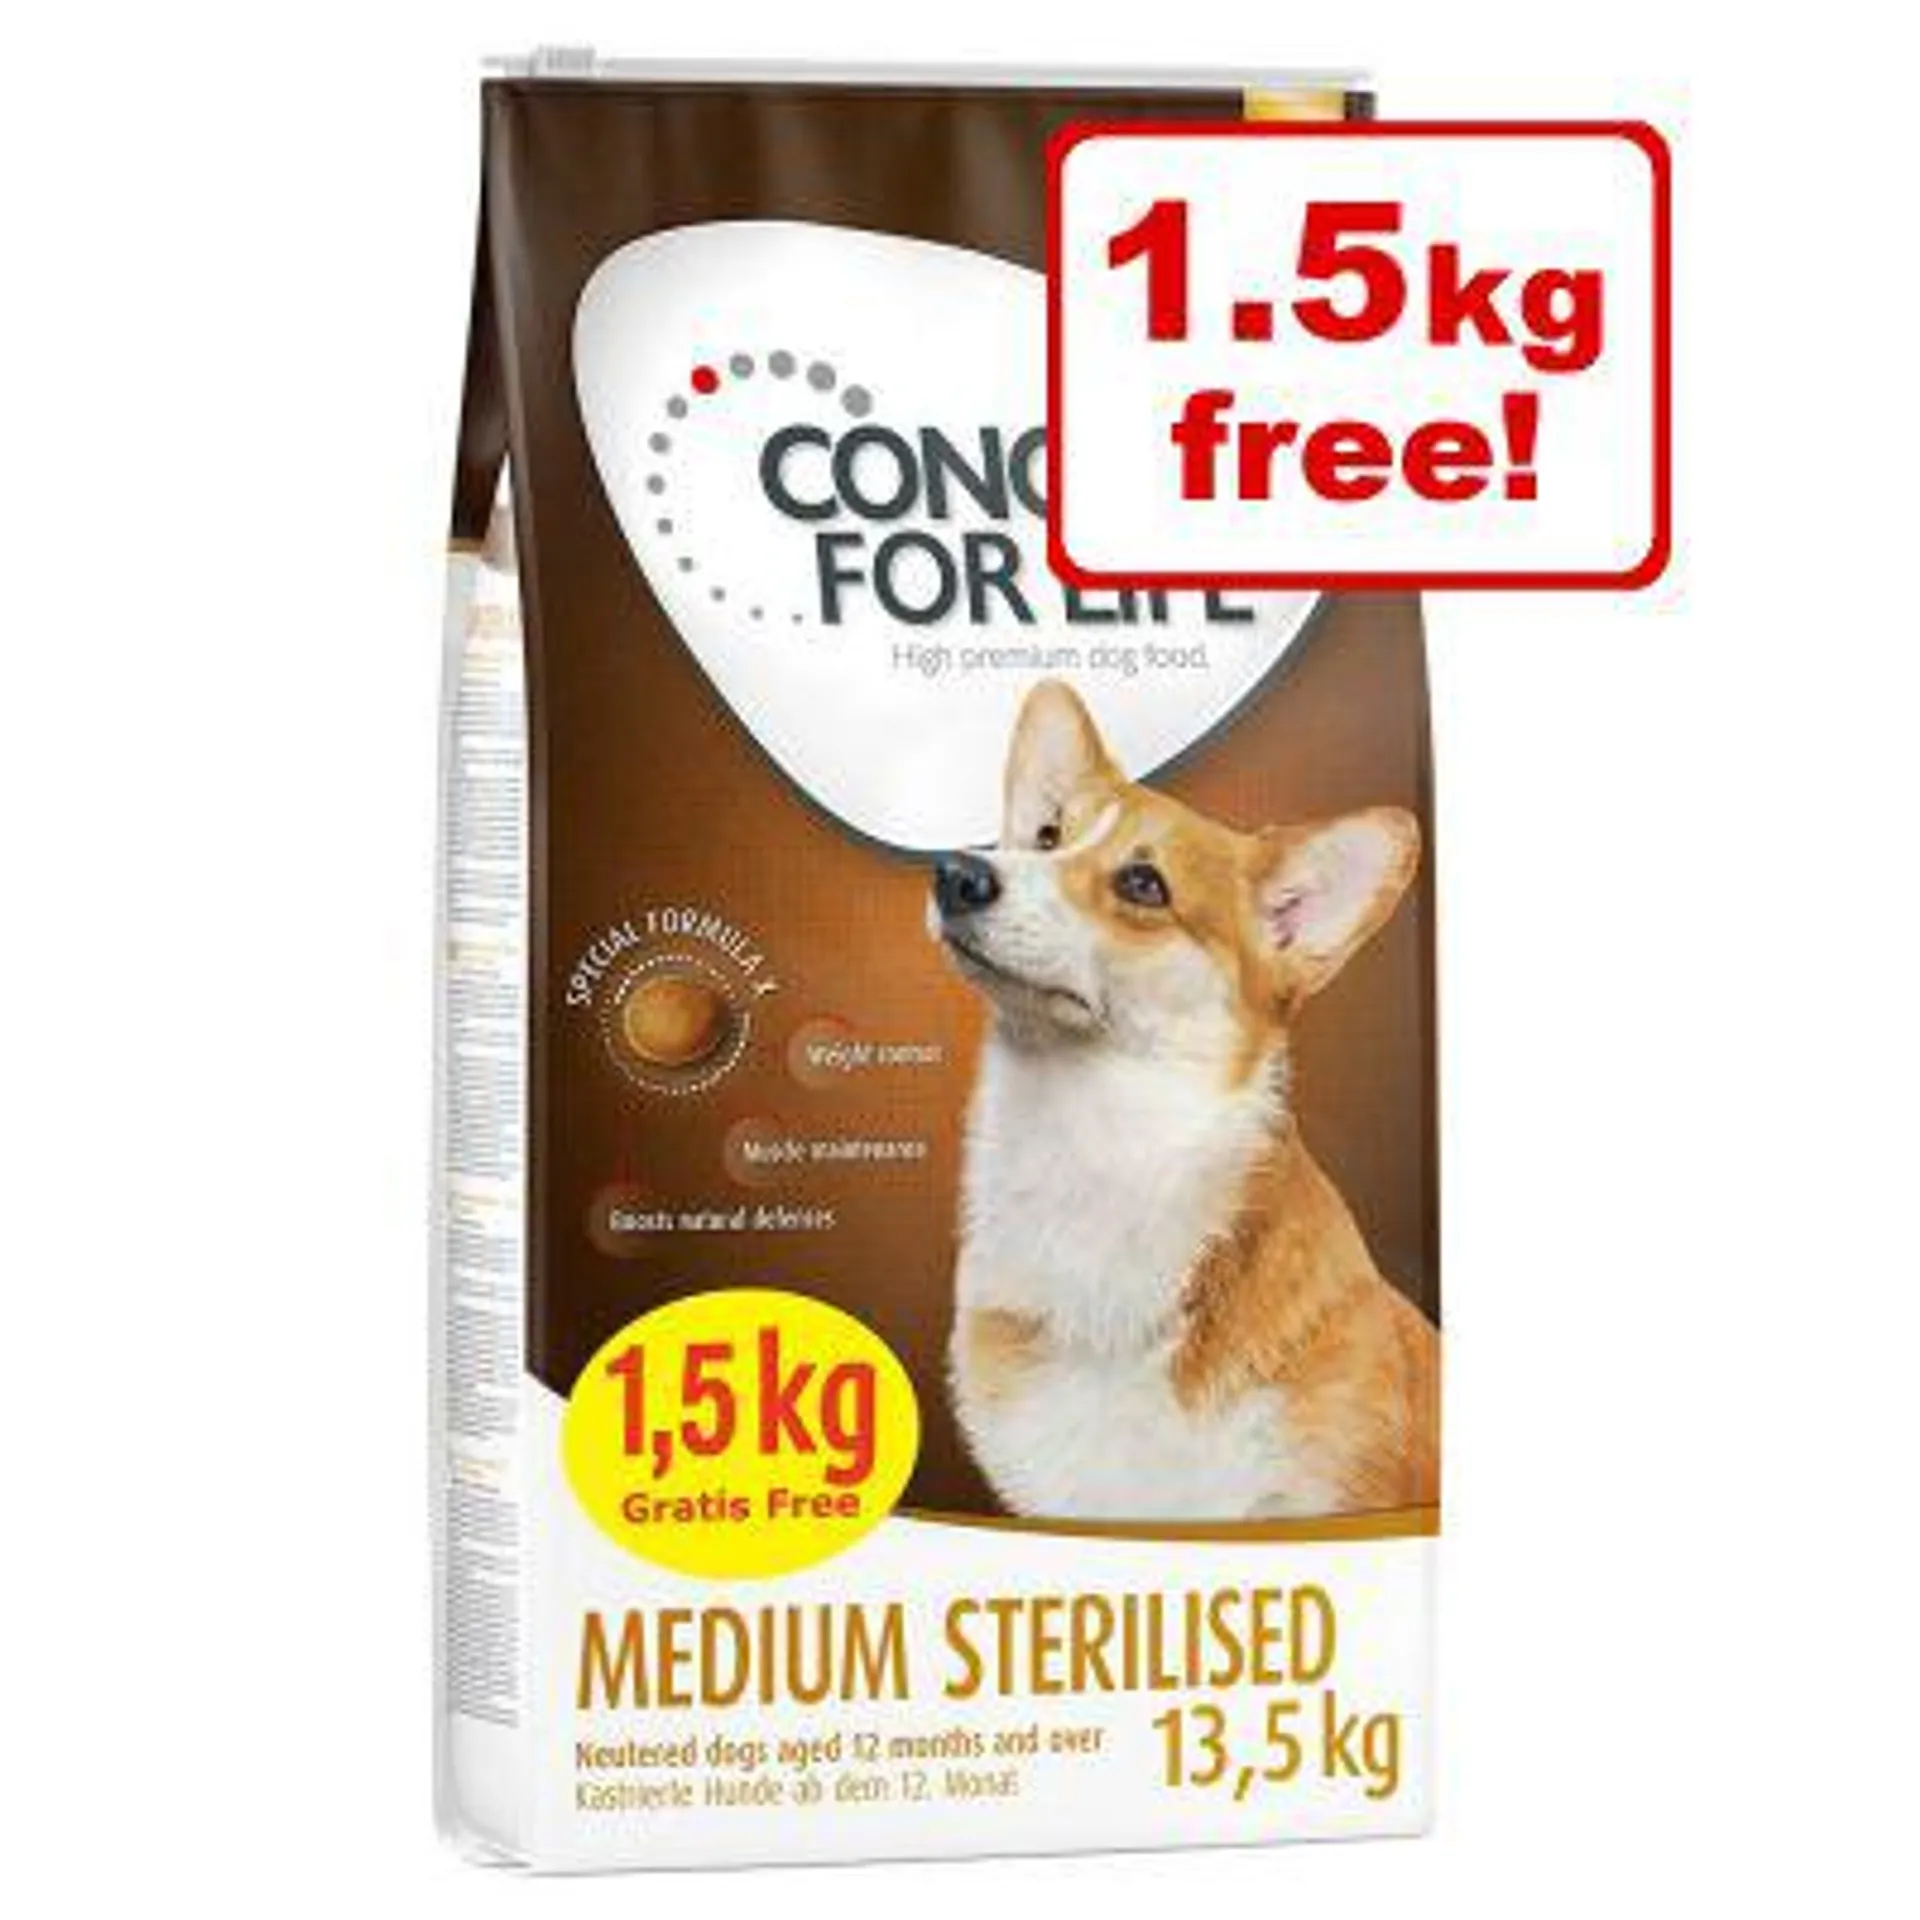 13.5kg Concept for Life Medium Sterilised Dry Dog Food Bonus Bag - 12kg + 1.5kg Extra Free!*